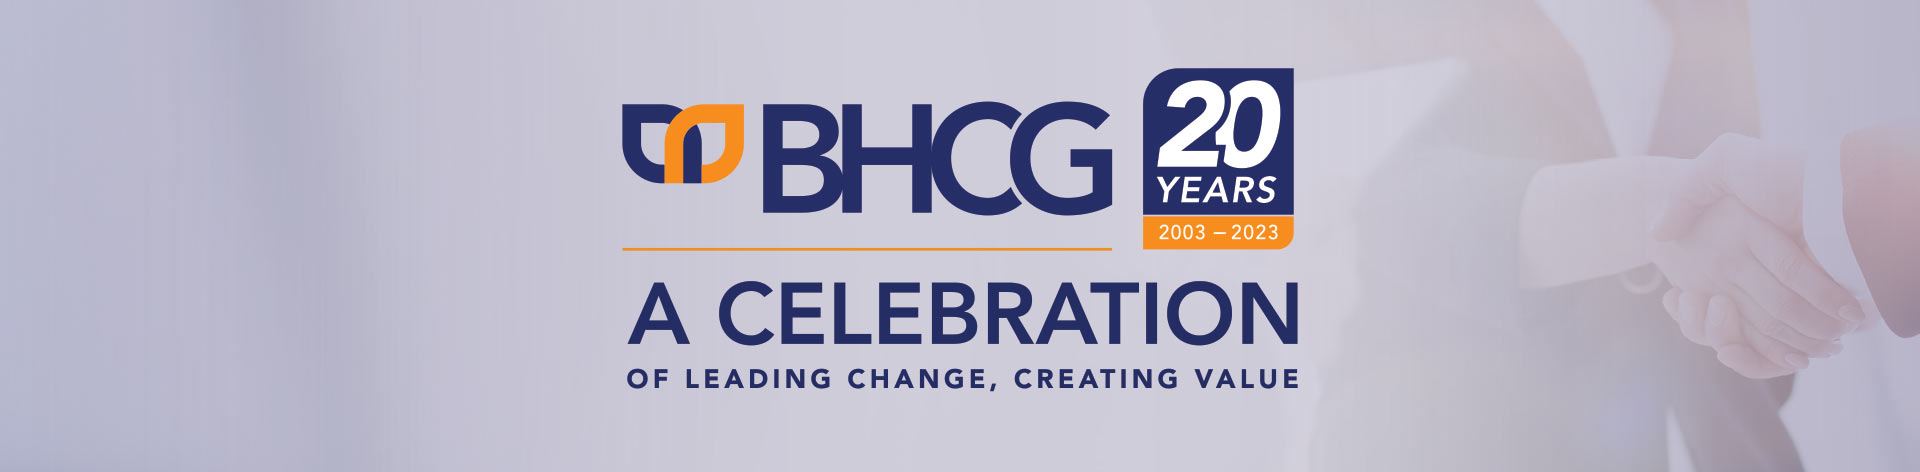 BHCG's 20th Anniversary Celebration of Leading Change, Creating Value